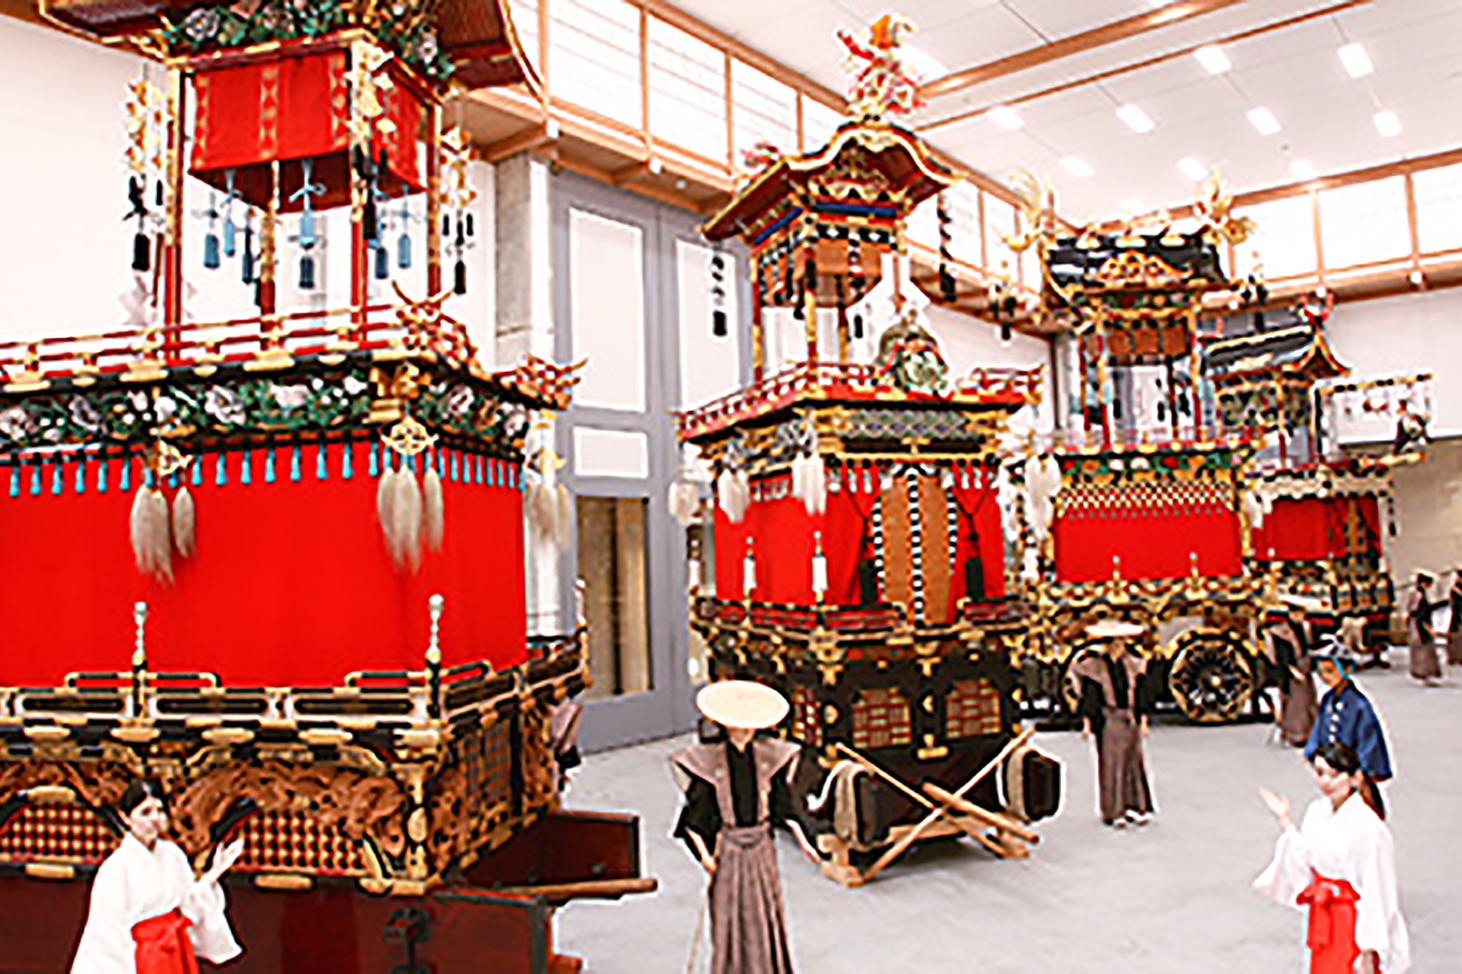 The Takayama Festival Floats Exhibition Hall